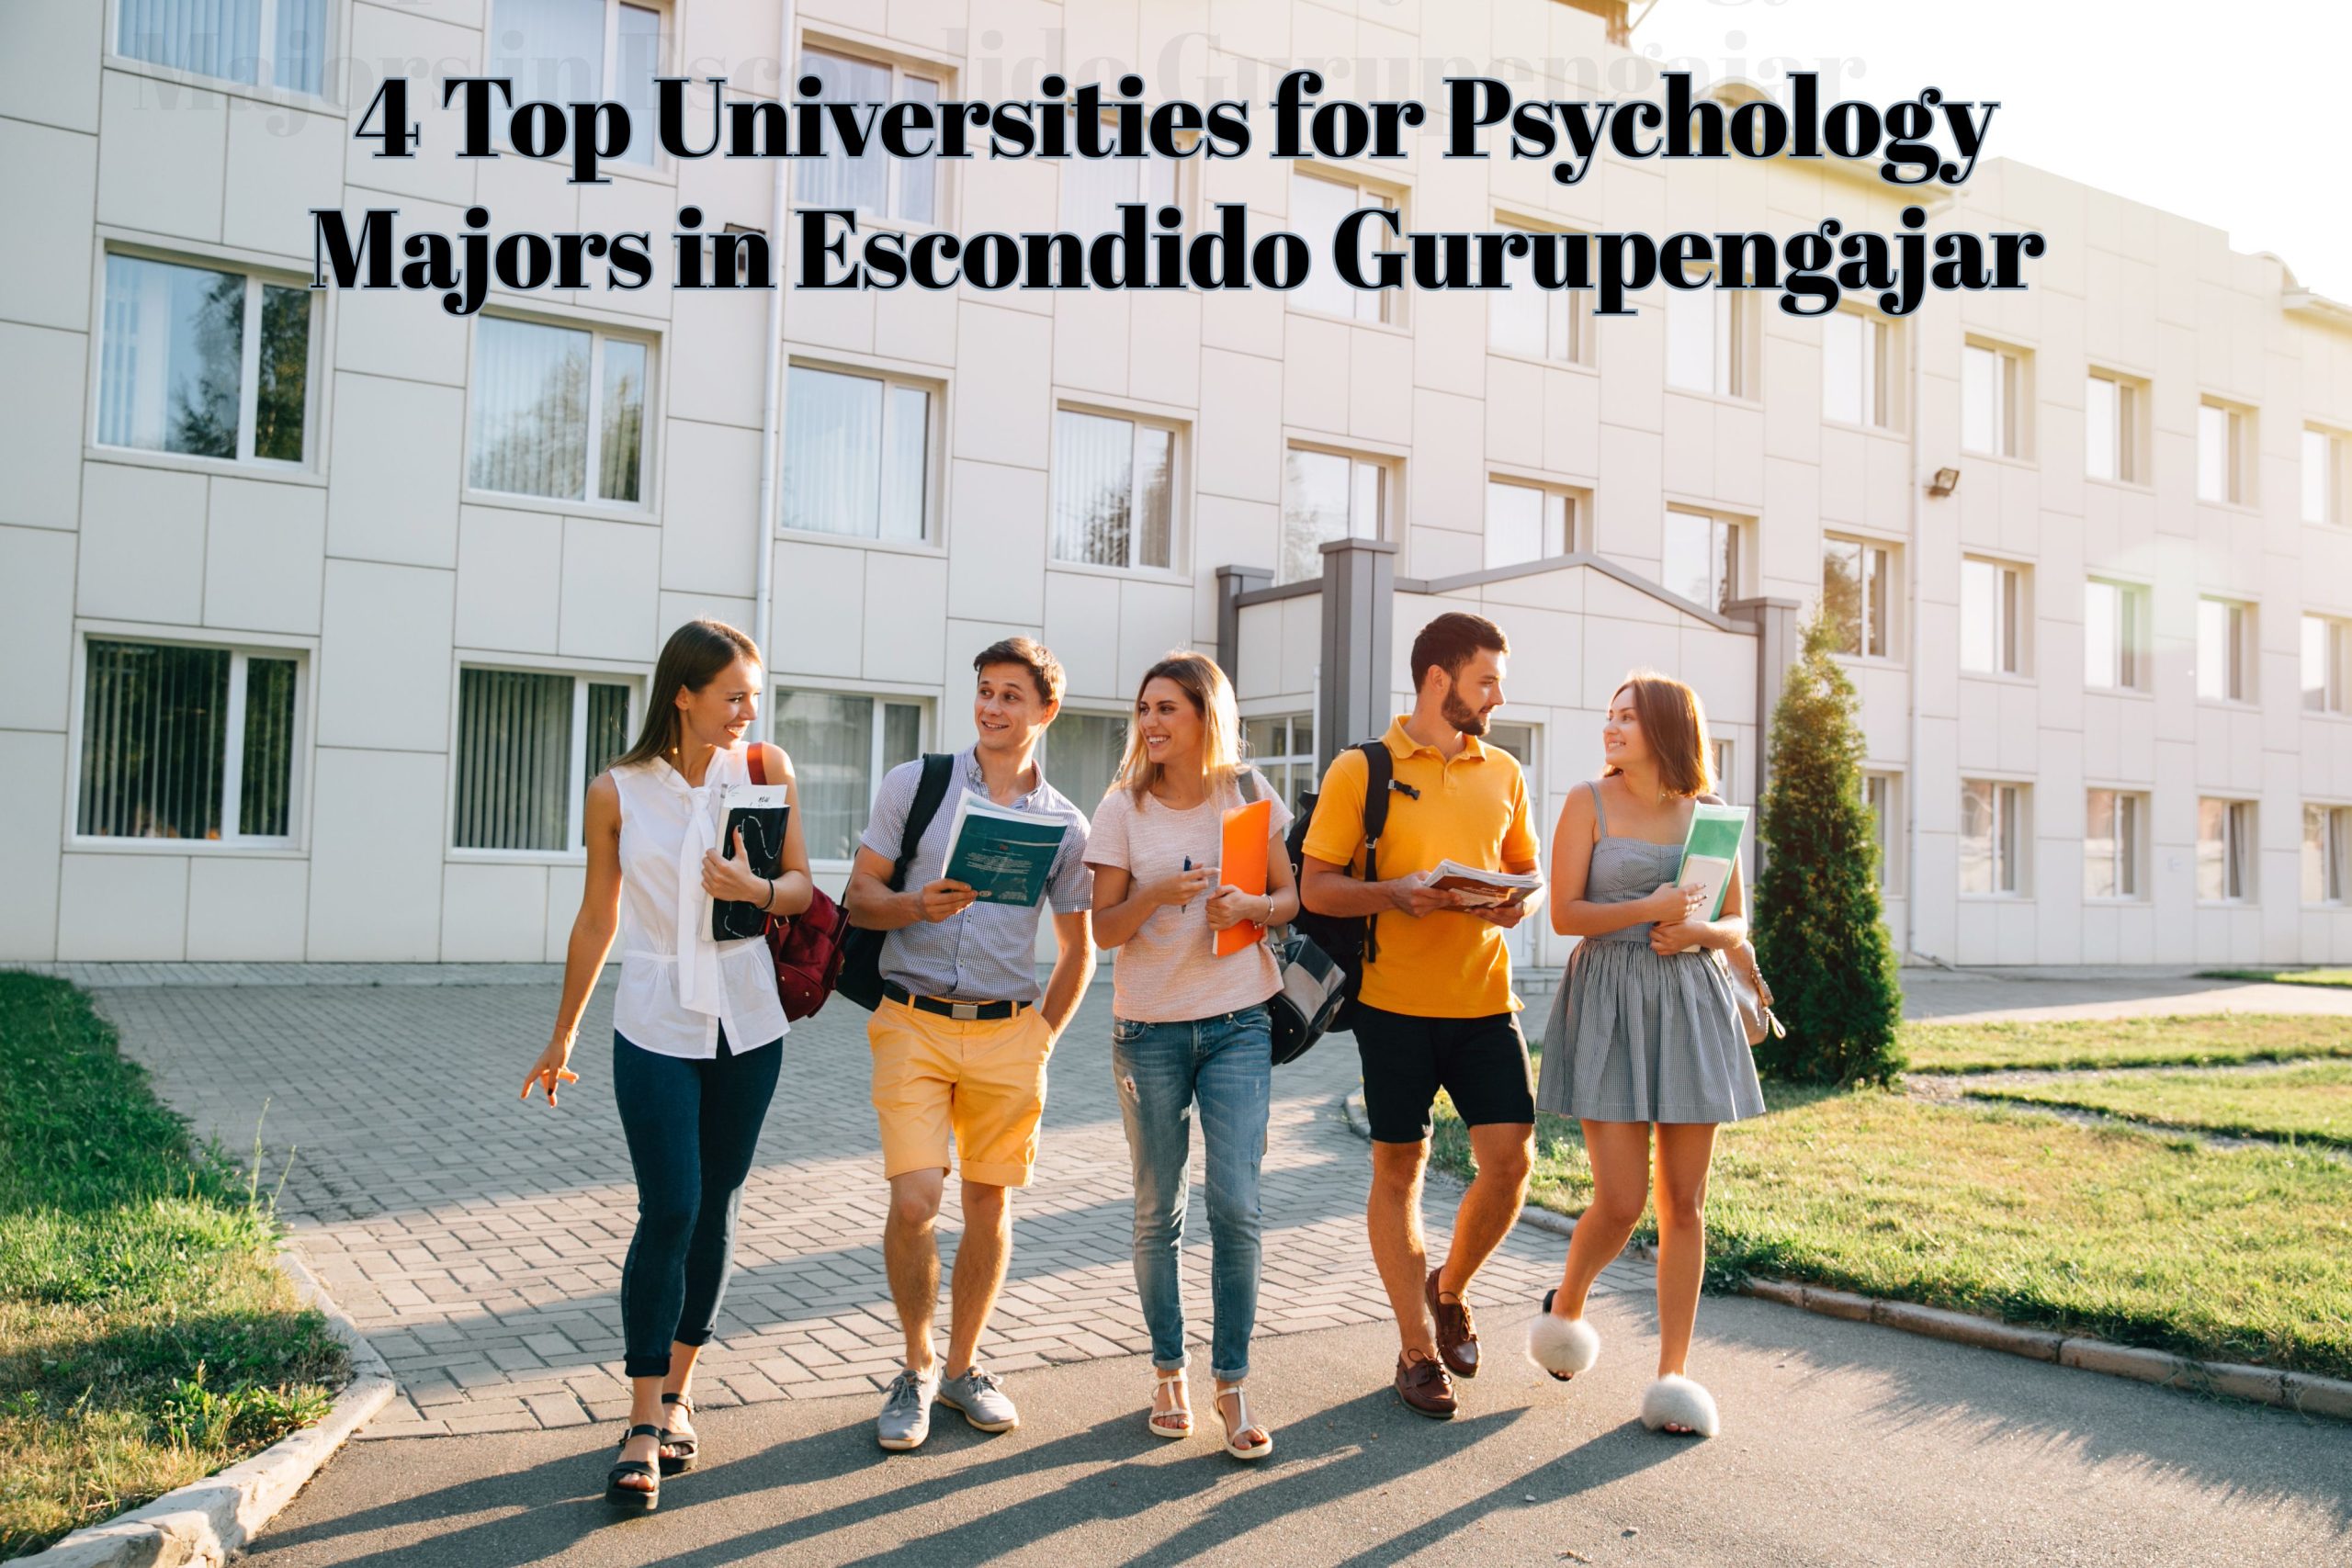 4 Top Universities for Psychology Majors in Escondido Gurupengajar